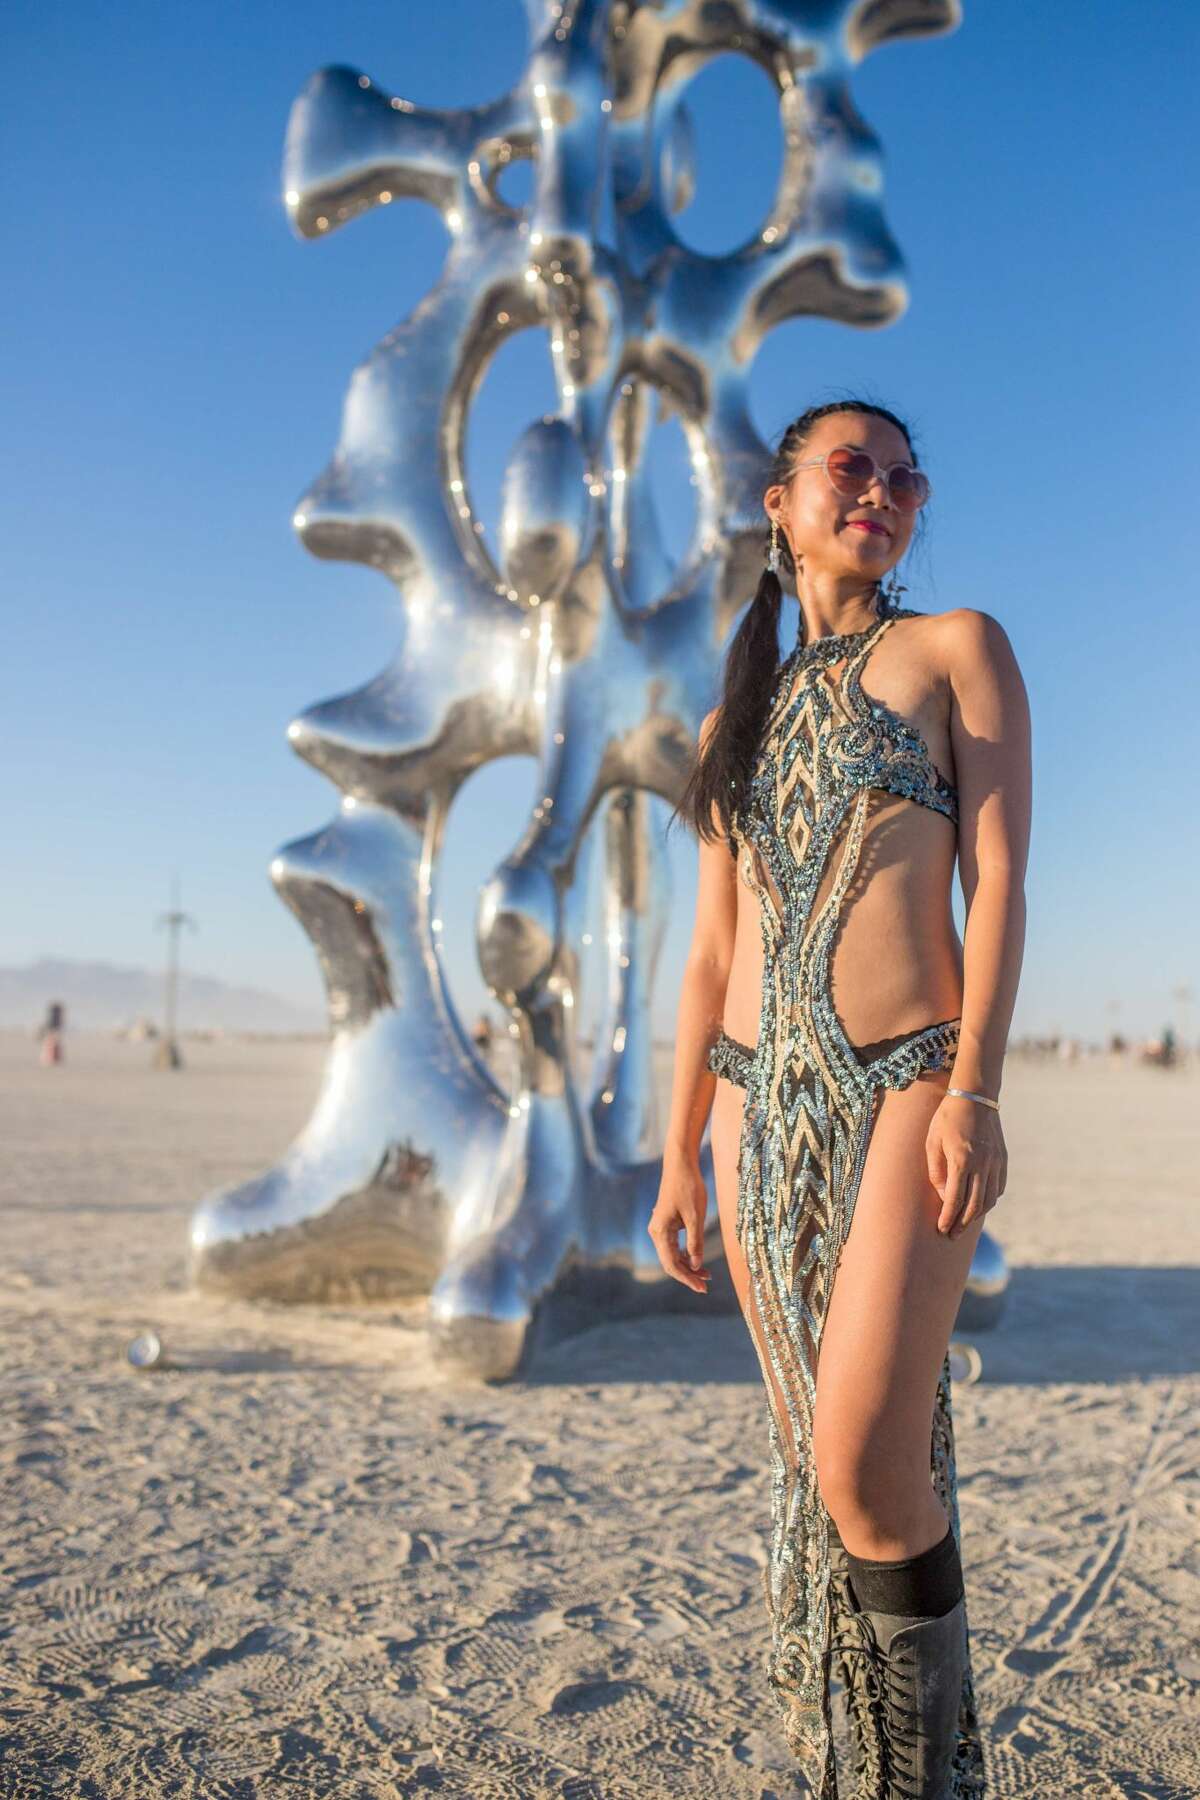 Playa Style Fashion Portraits From Burning Man 2019 